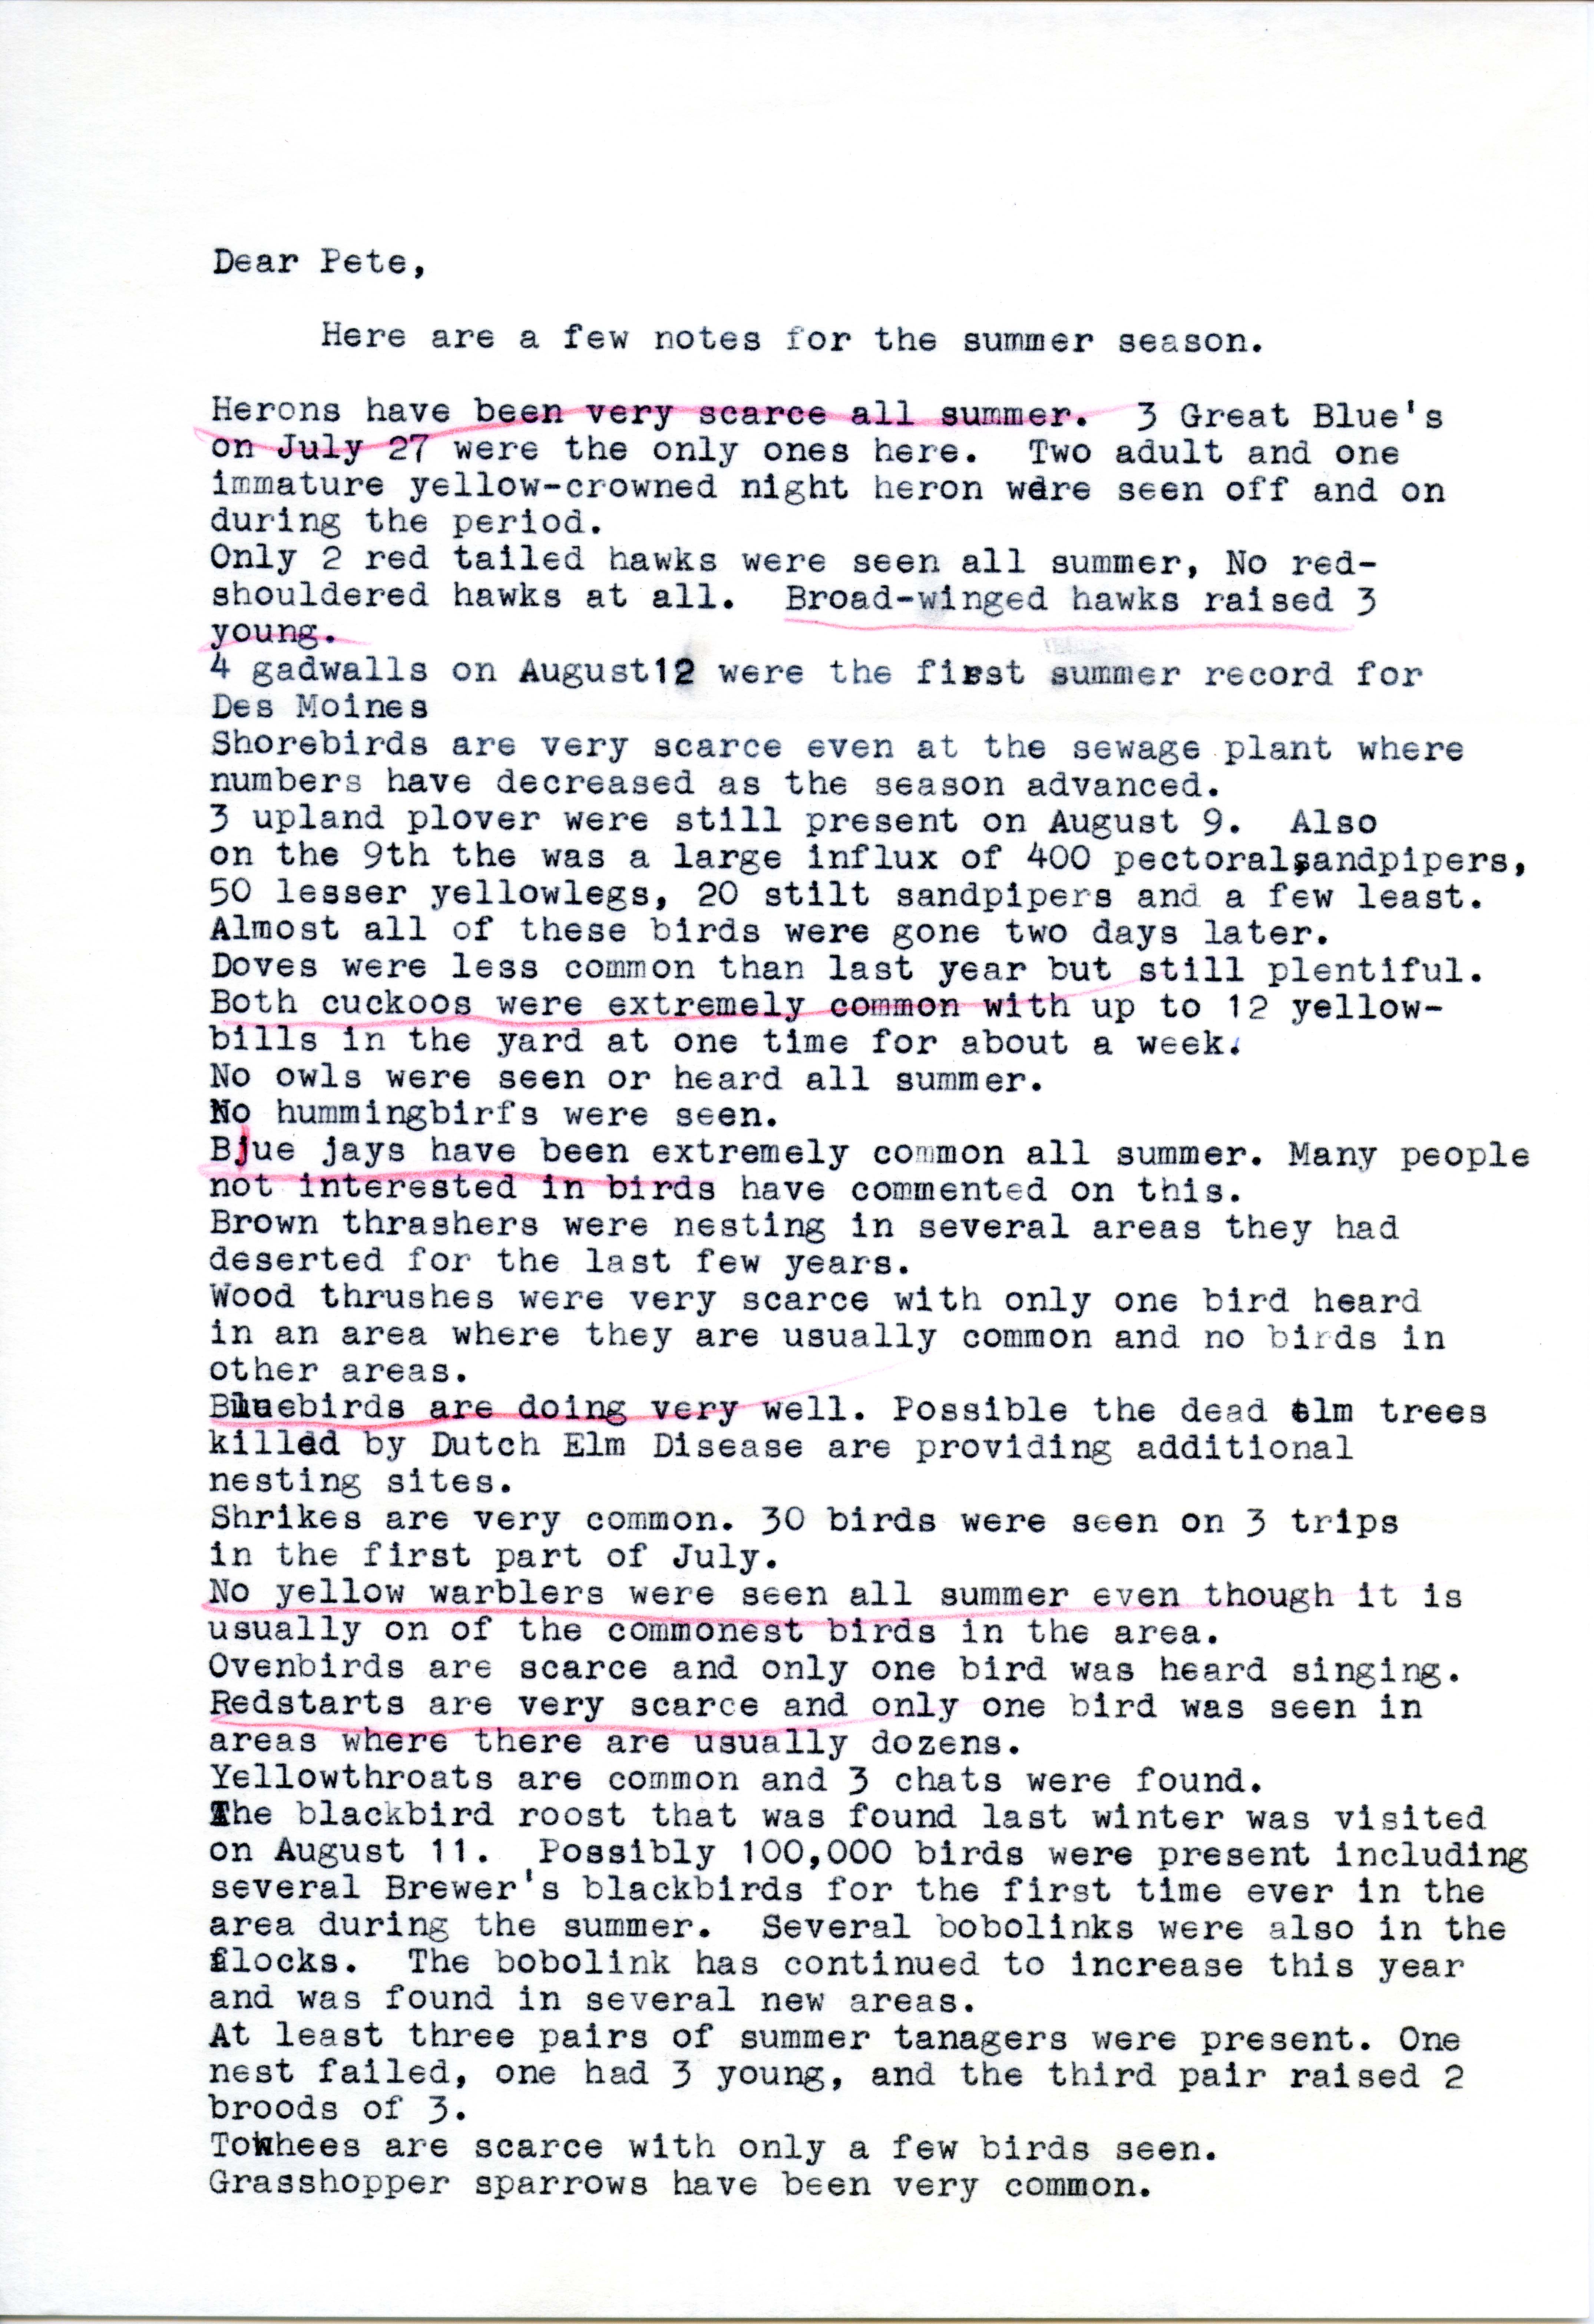 Joe Kennedy letter to Peter C. Petersen regarding field notes for summer, 1963